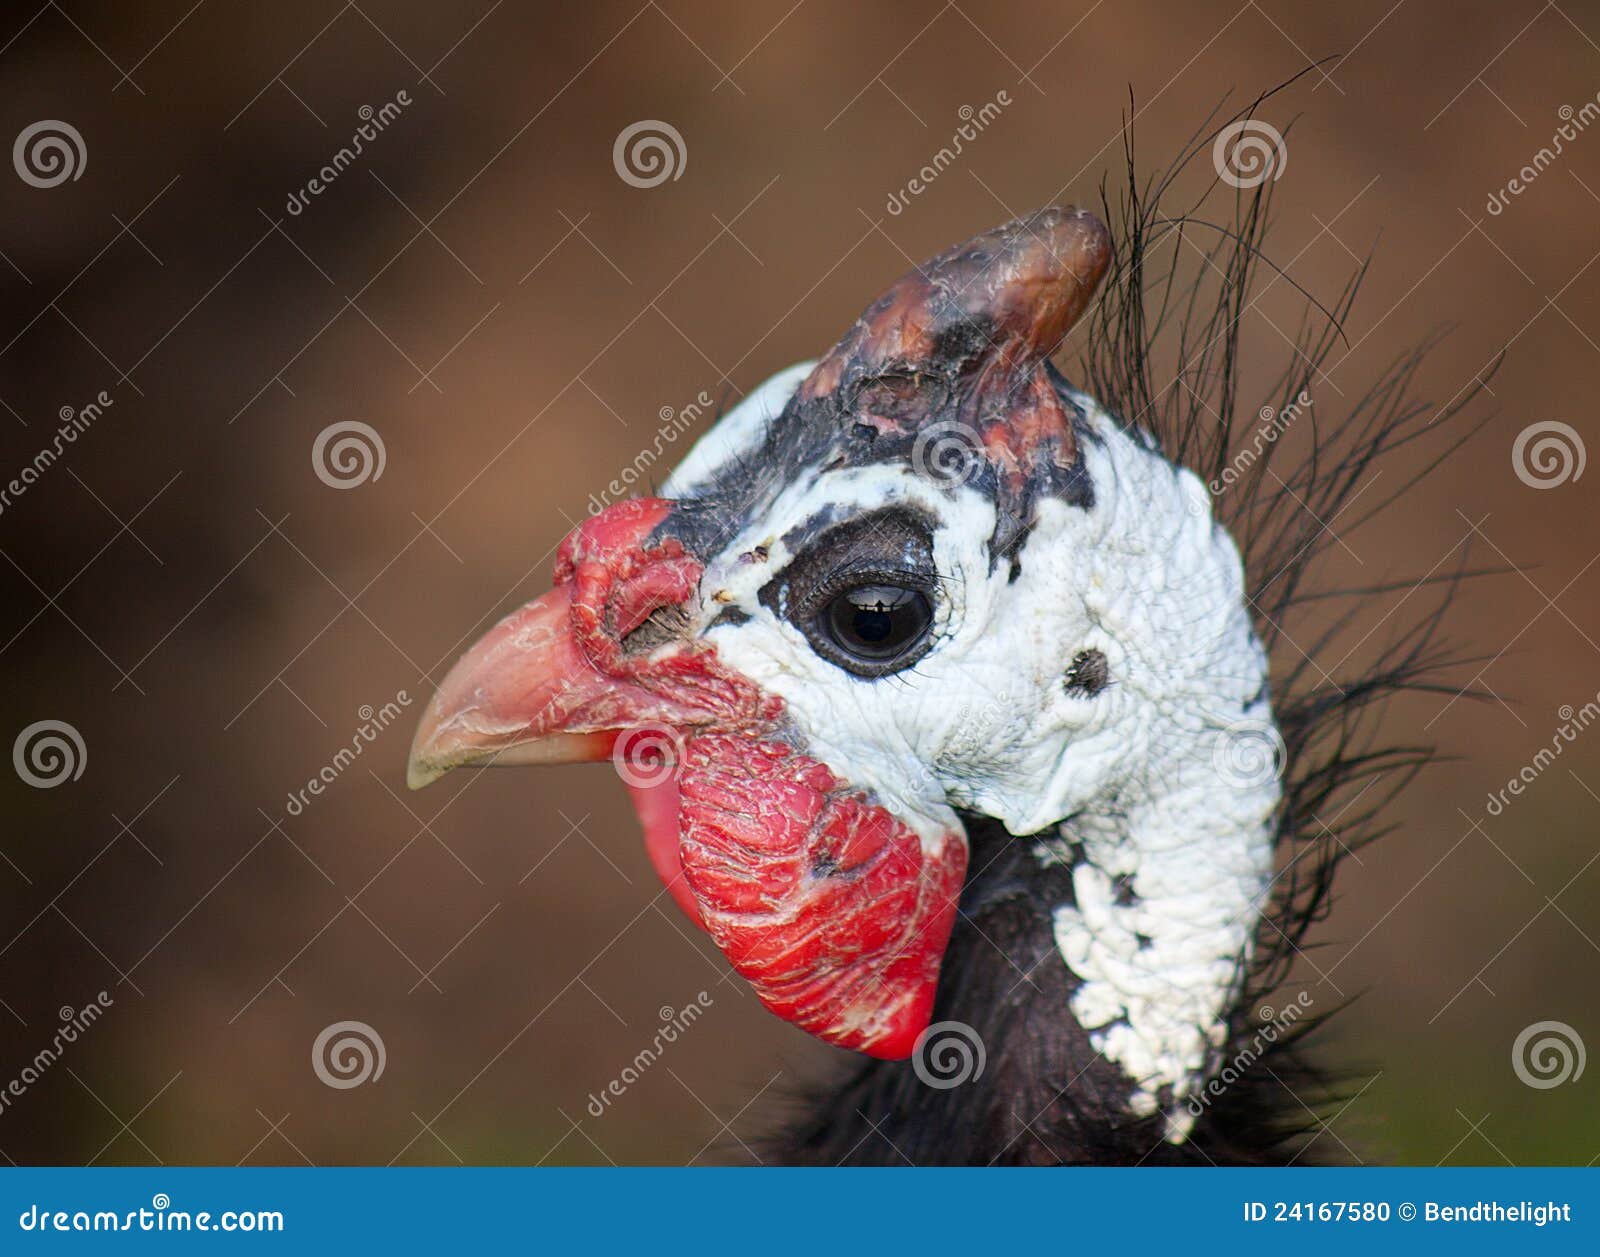 guinea fowl portrait